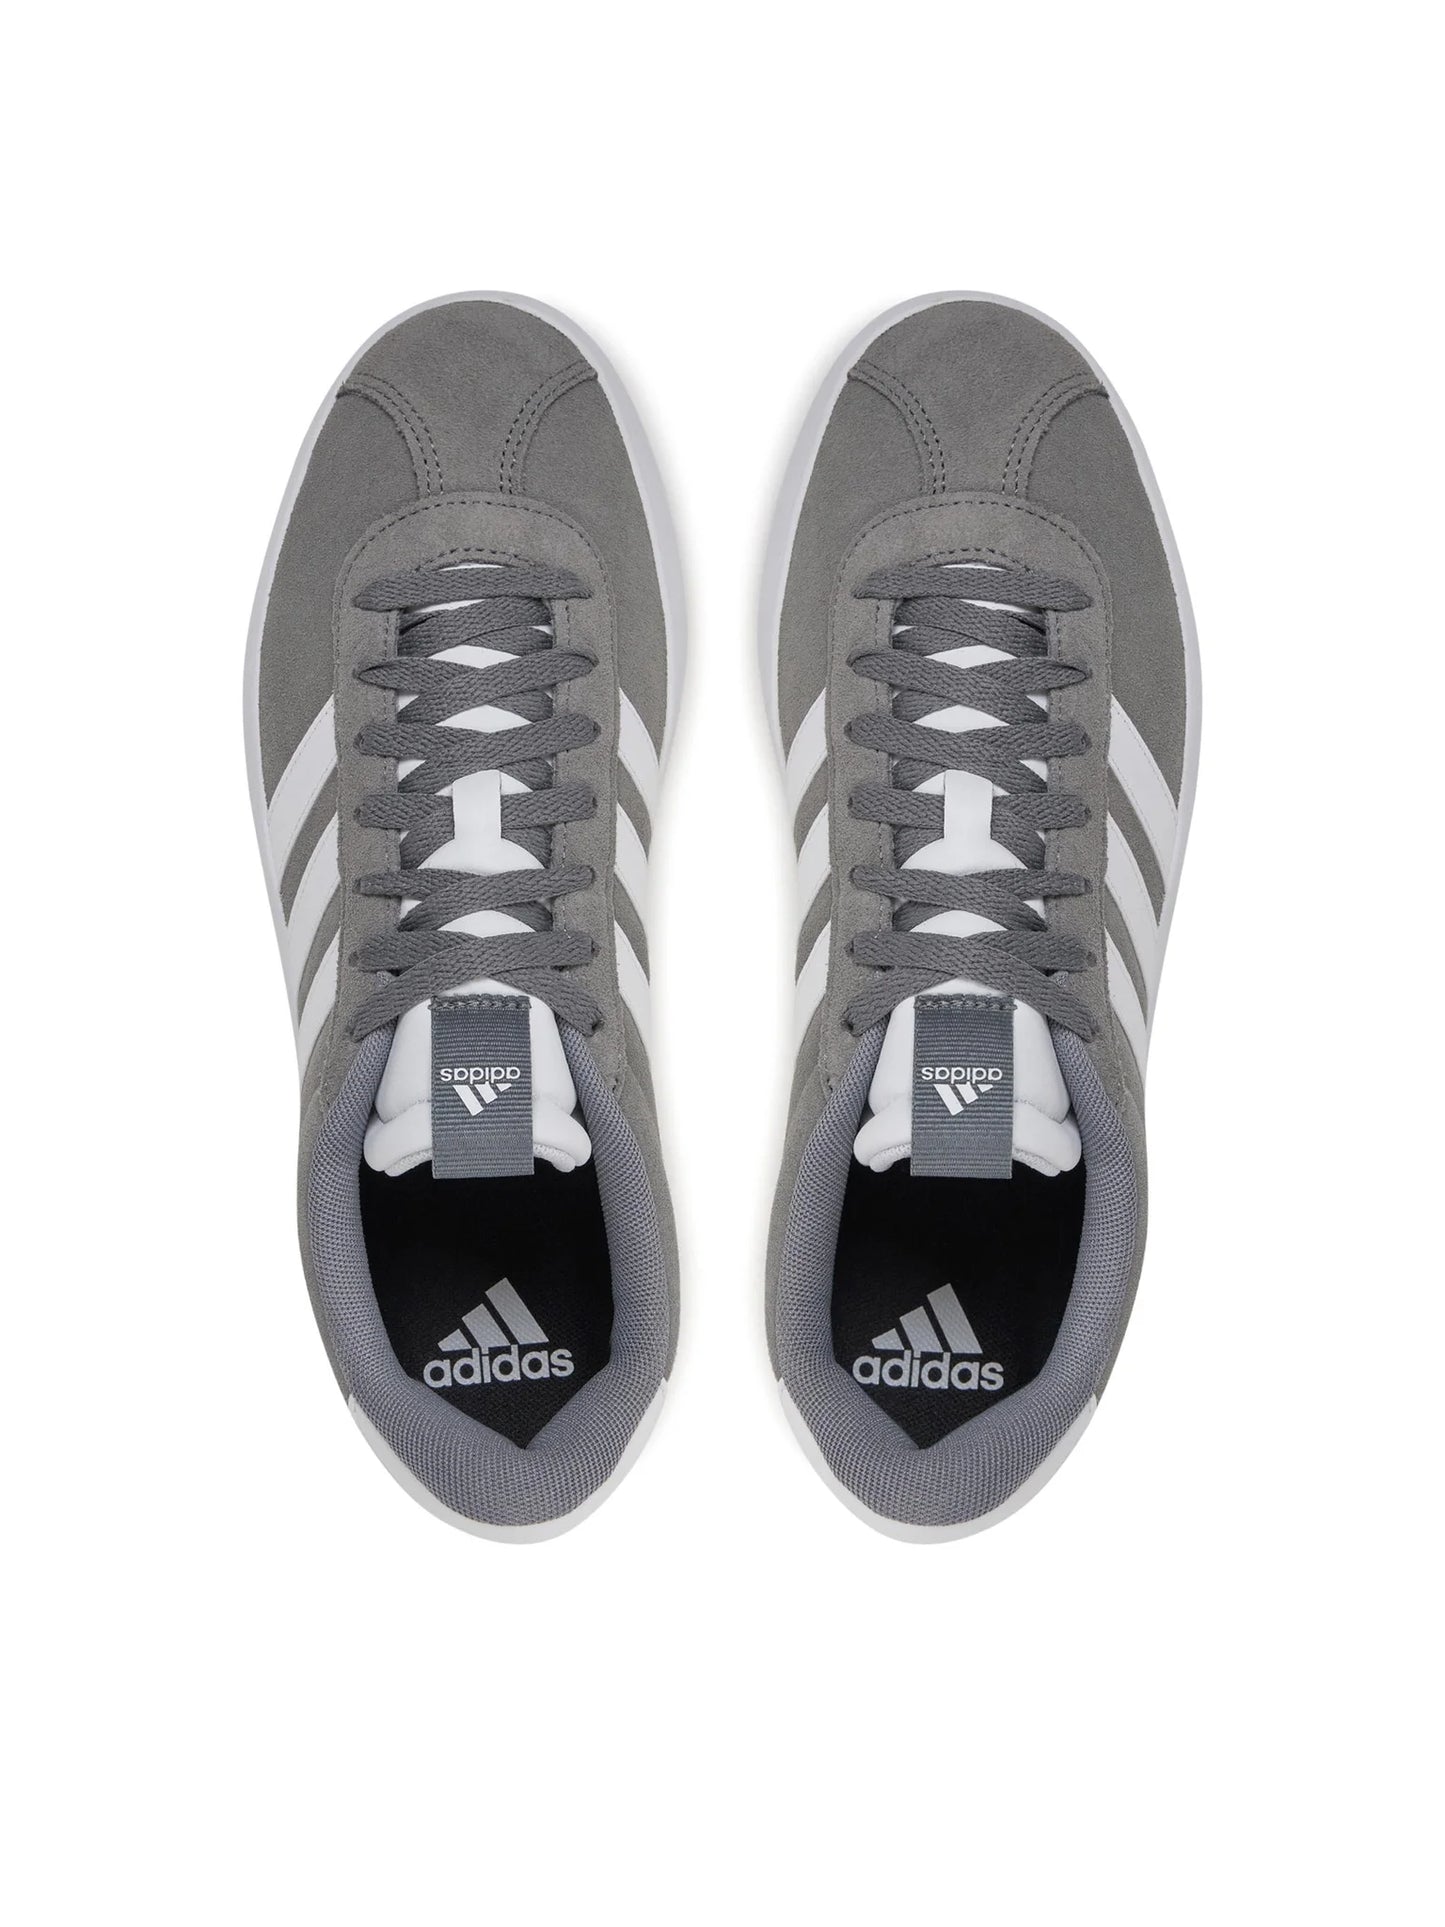 Adidas VL Court 3.0 white/grey